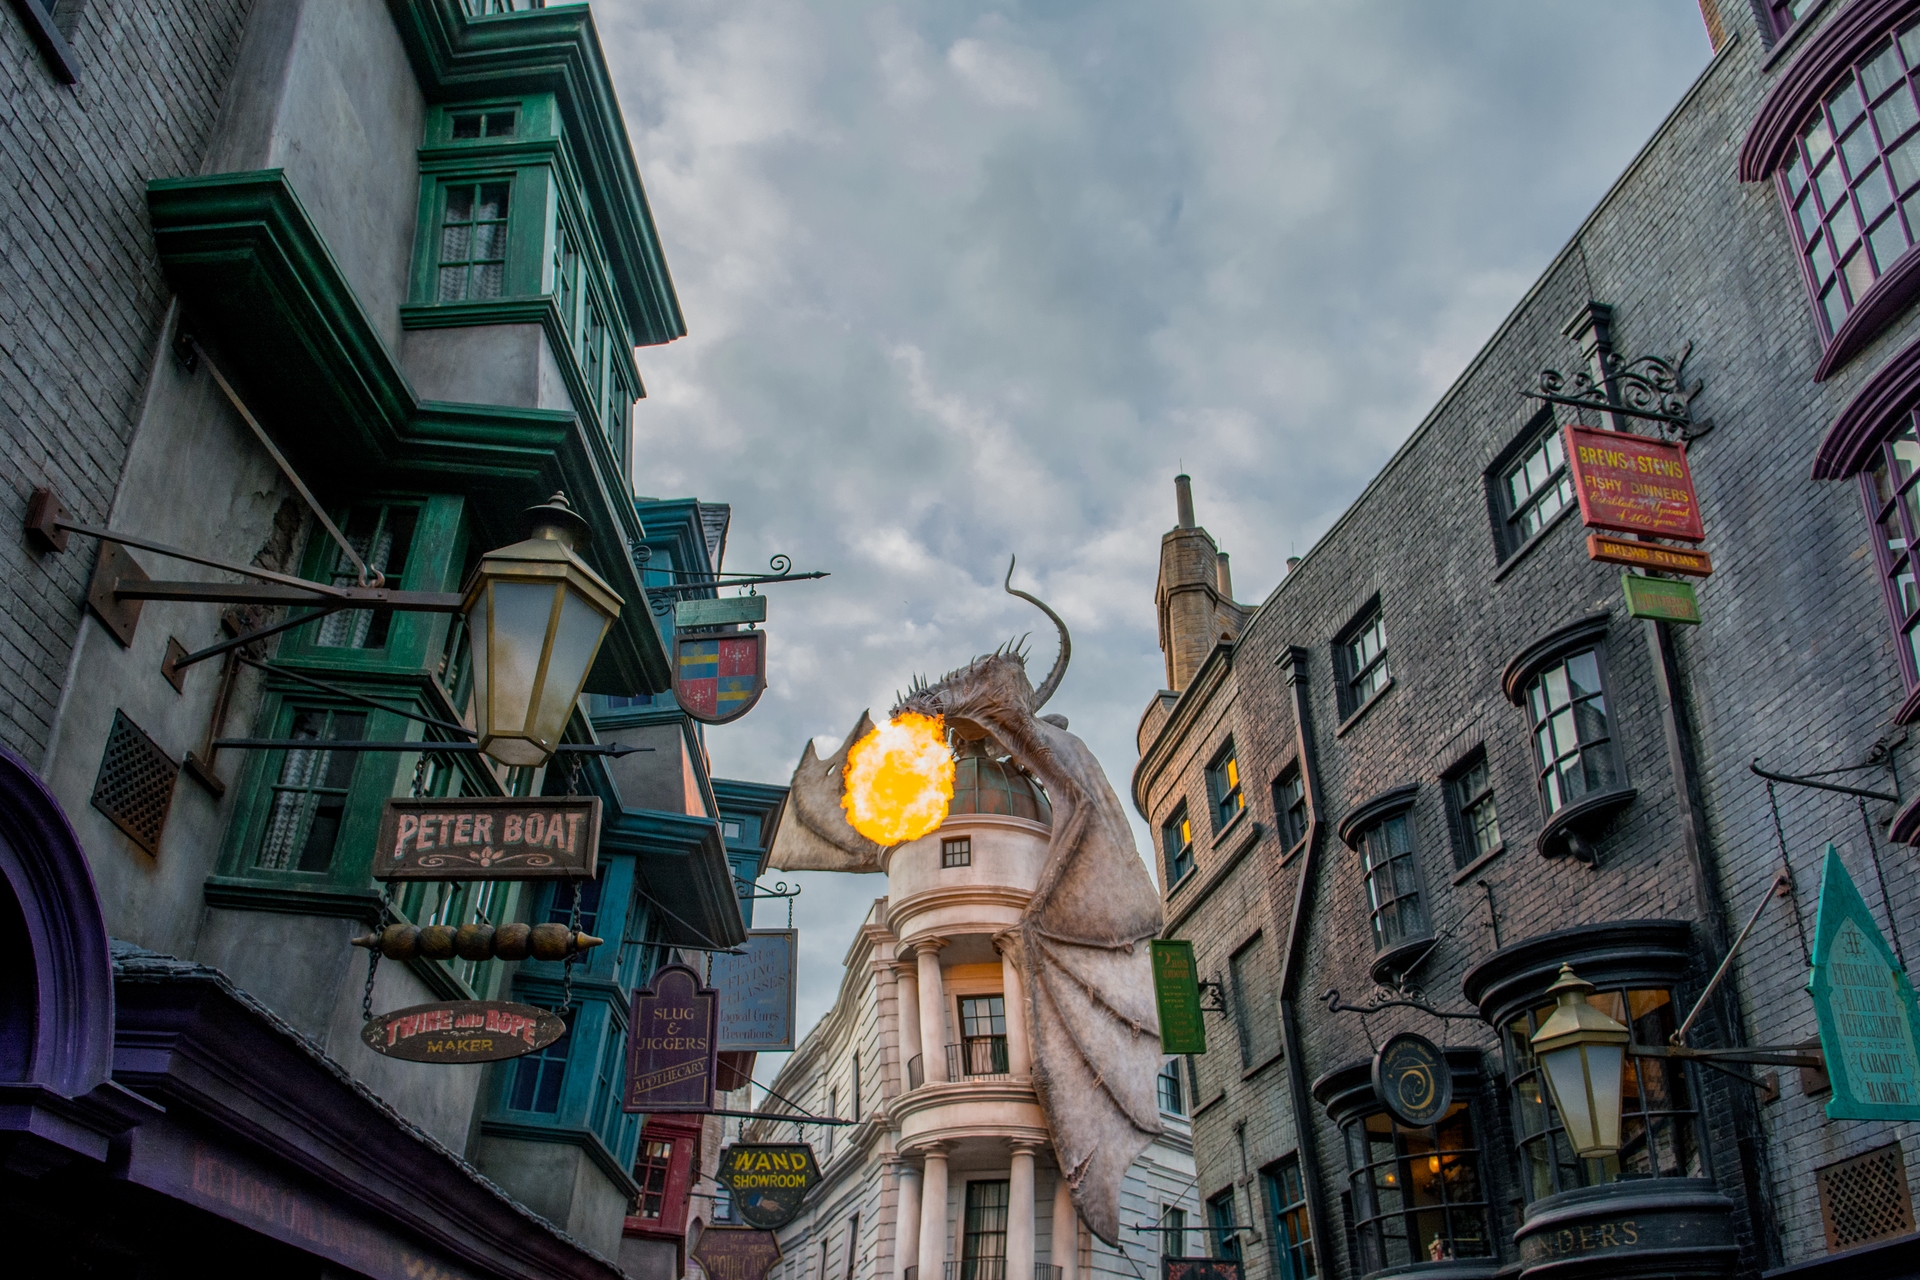 Diagon Alley recreated at Universal Studios Florida.